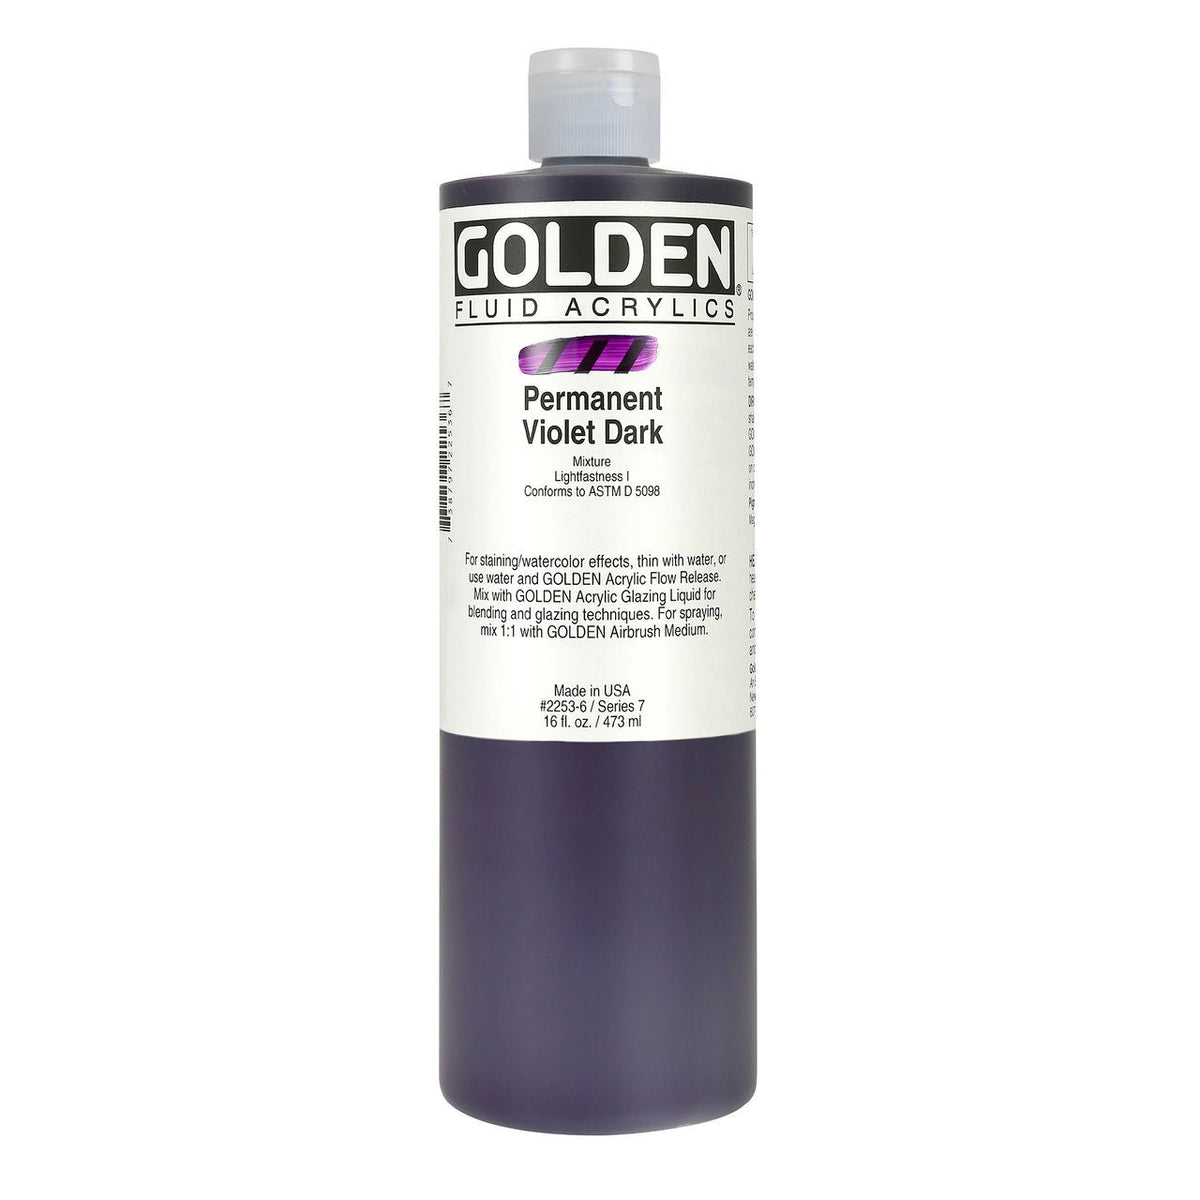 Golden Fluid Acrylic Permanent Violet Dark 16 oz - merriartist.com